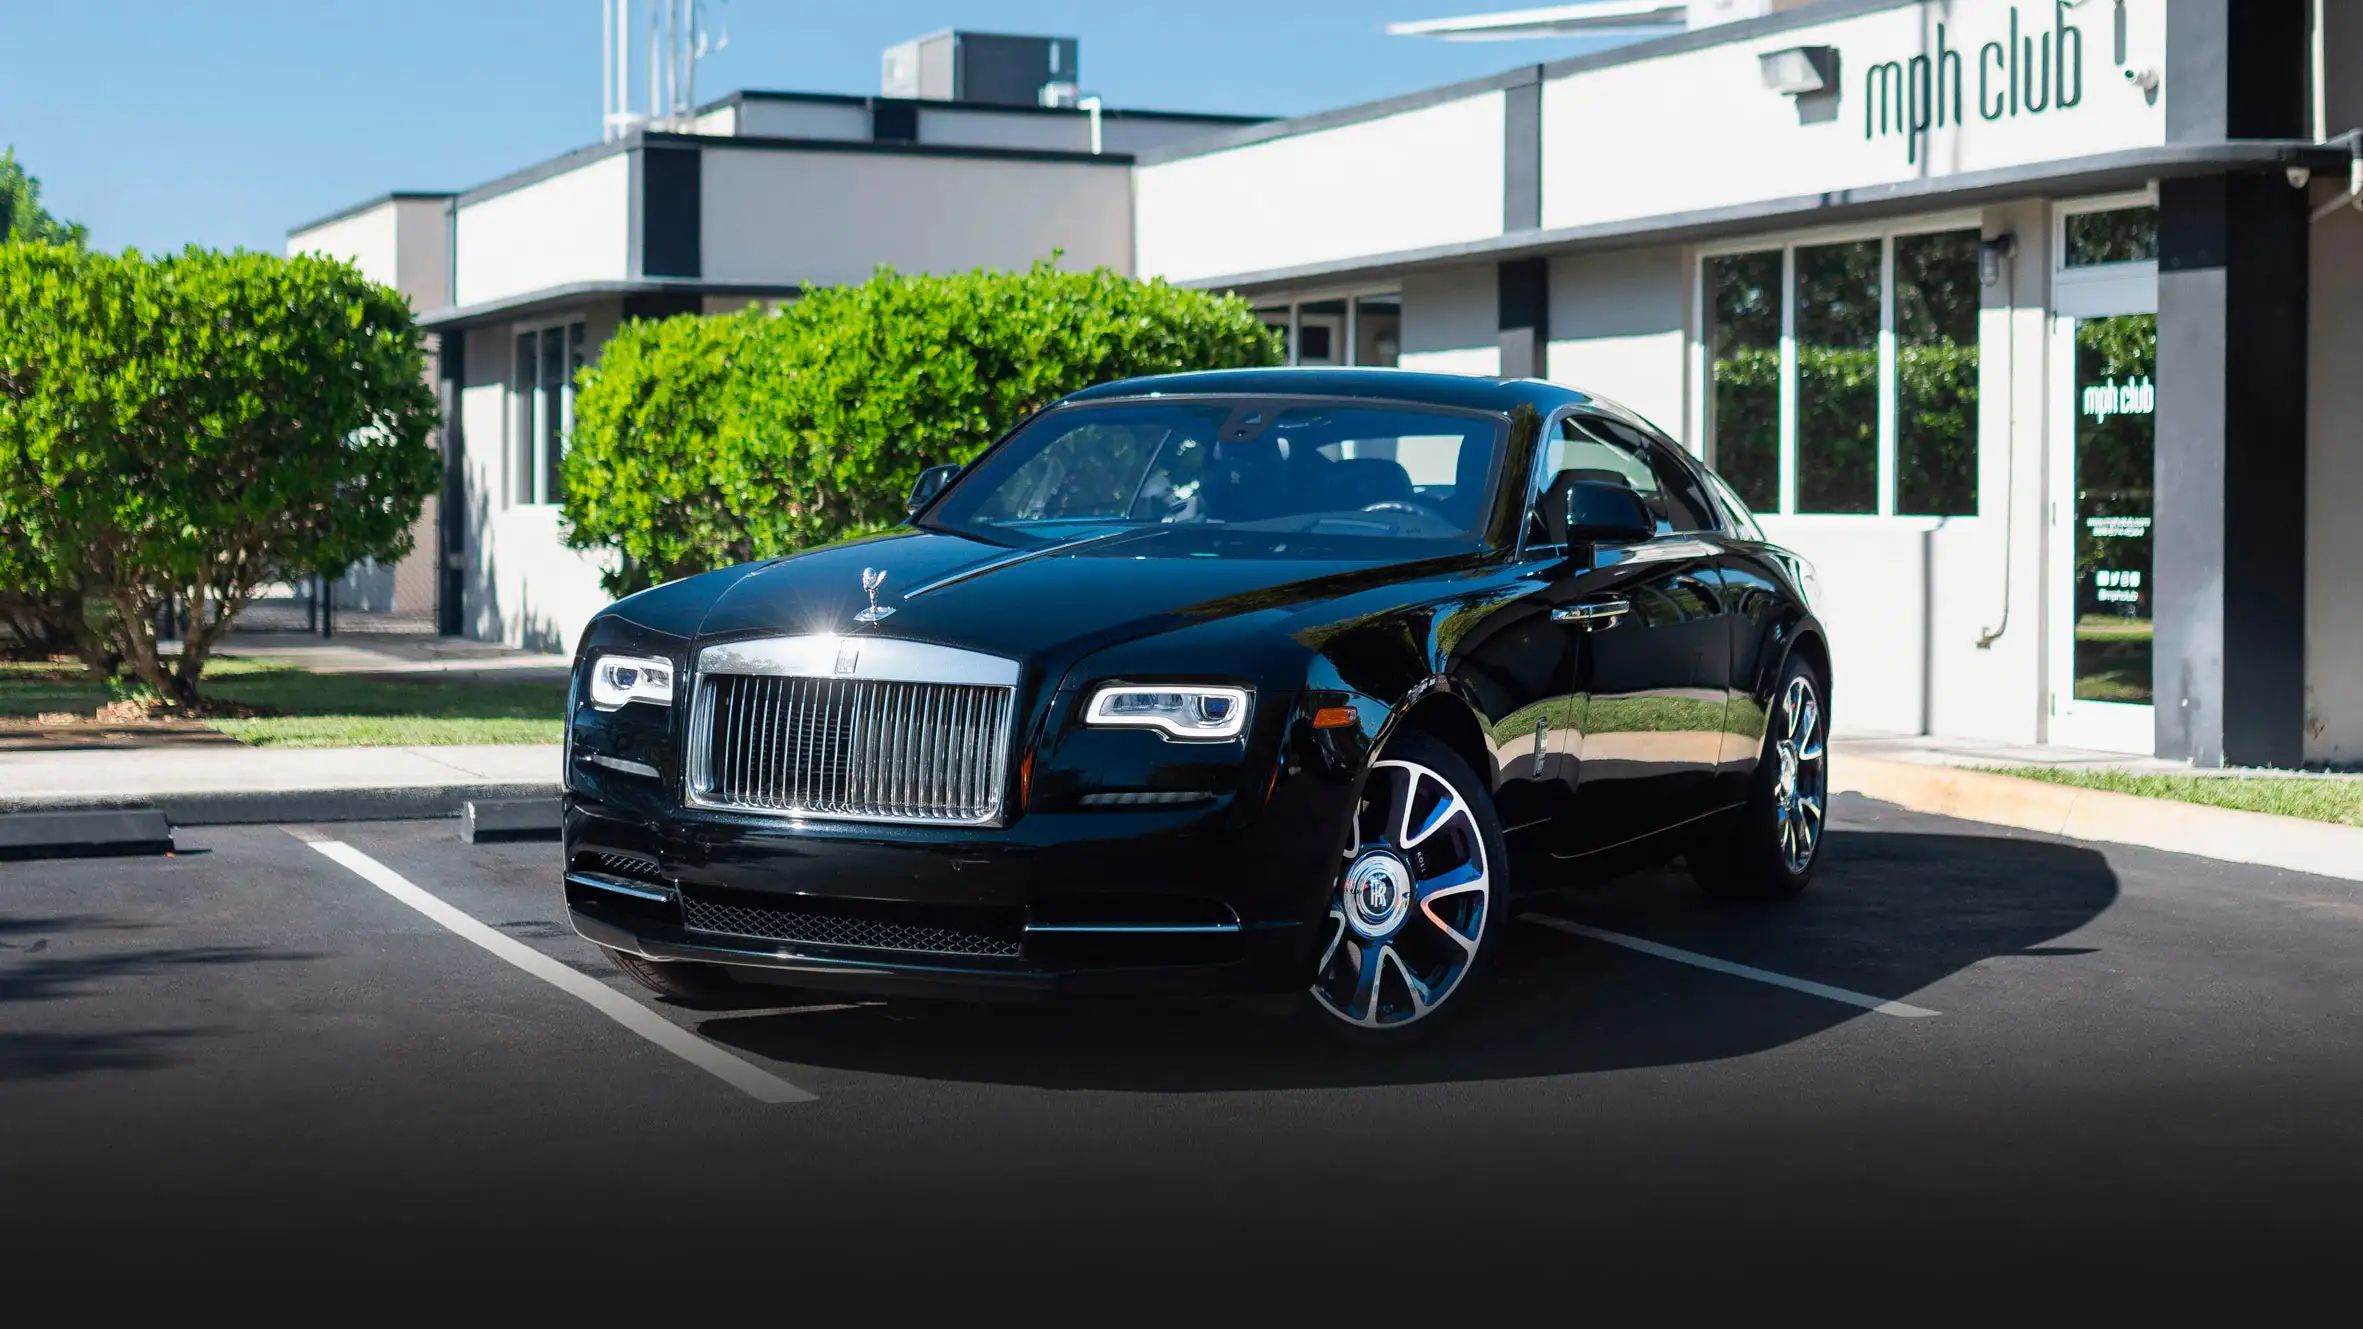 Black on black Rolls Royce Wraith rental Miami profile view mph club